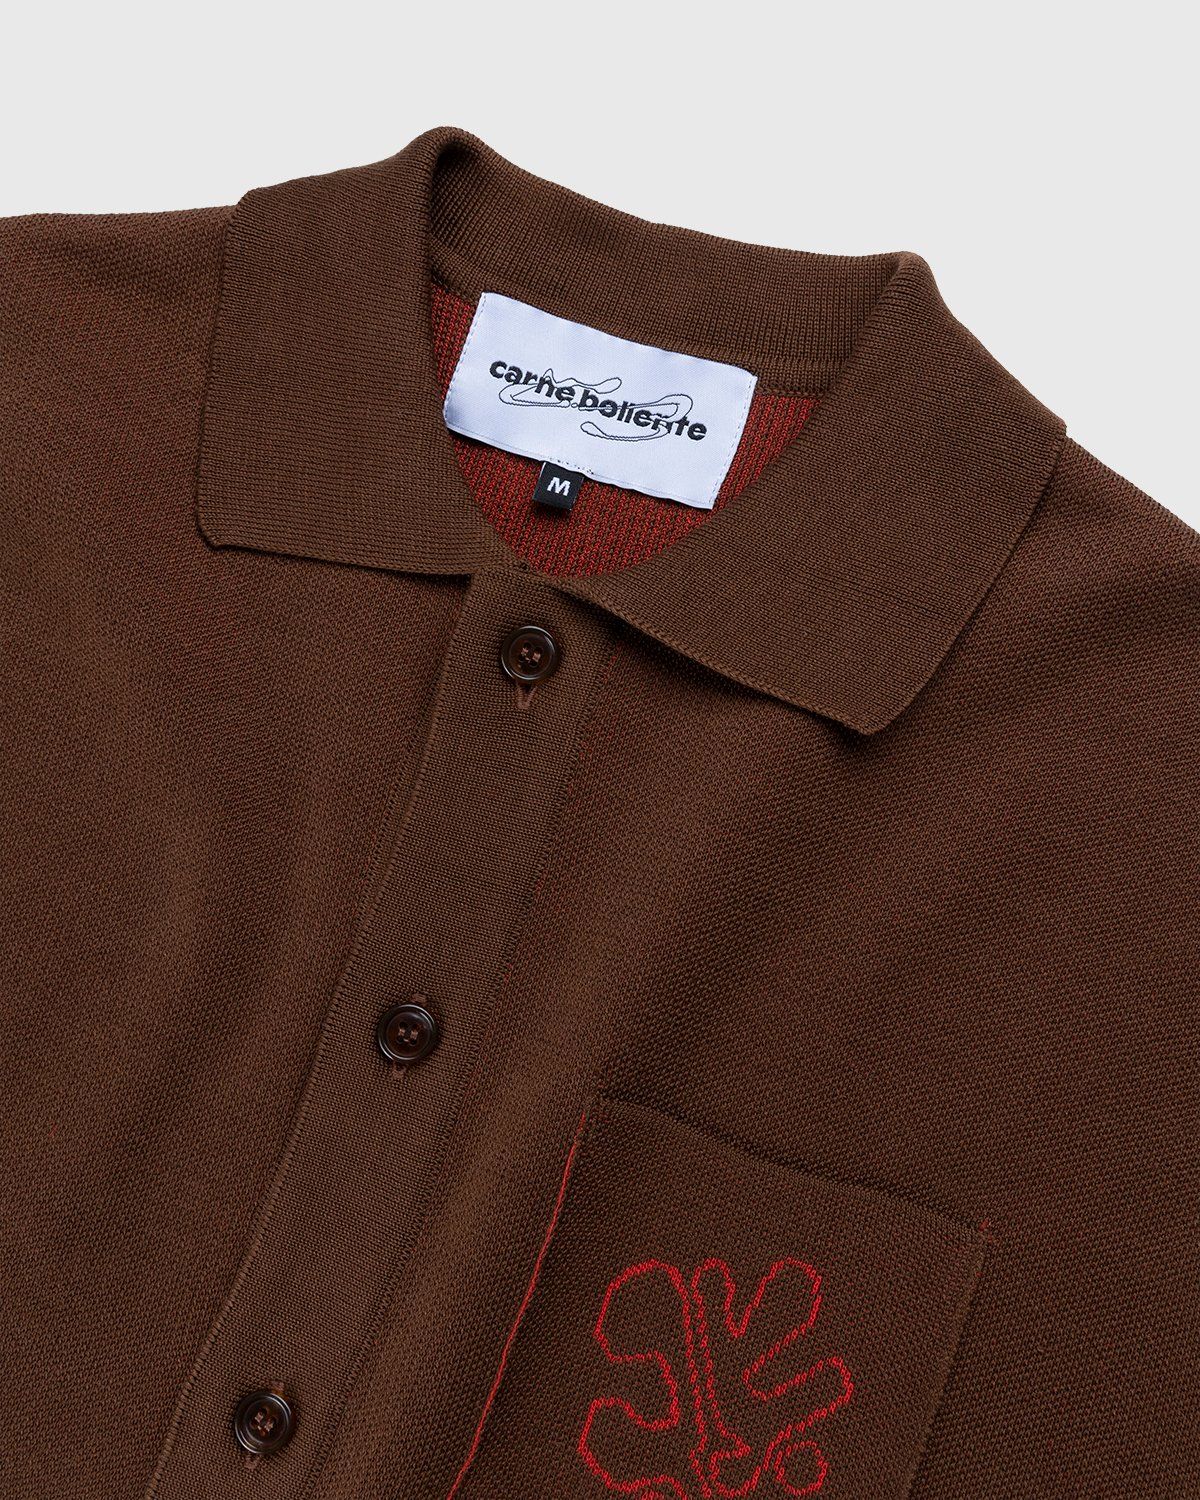 Carne Bollente – Upside Down Knit Shirt Brown | Highsnobiety Shop